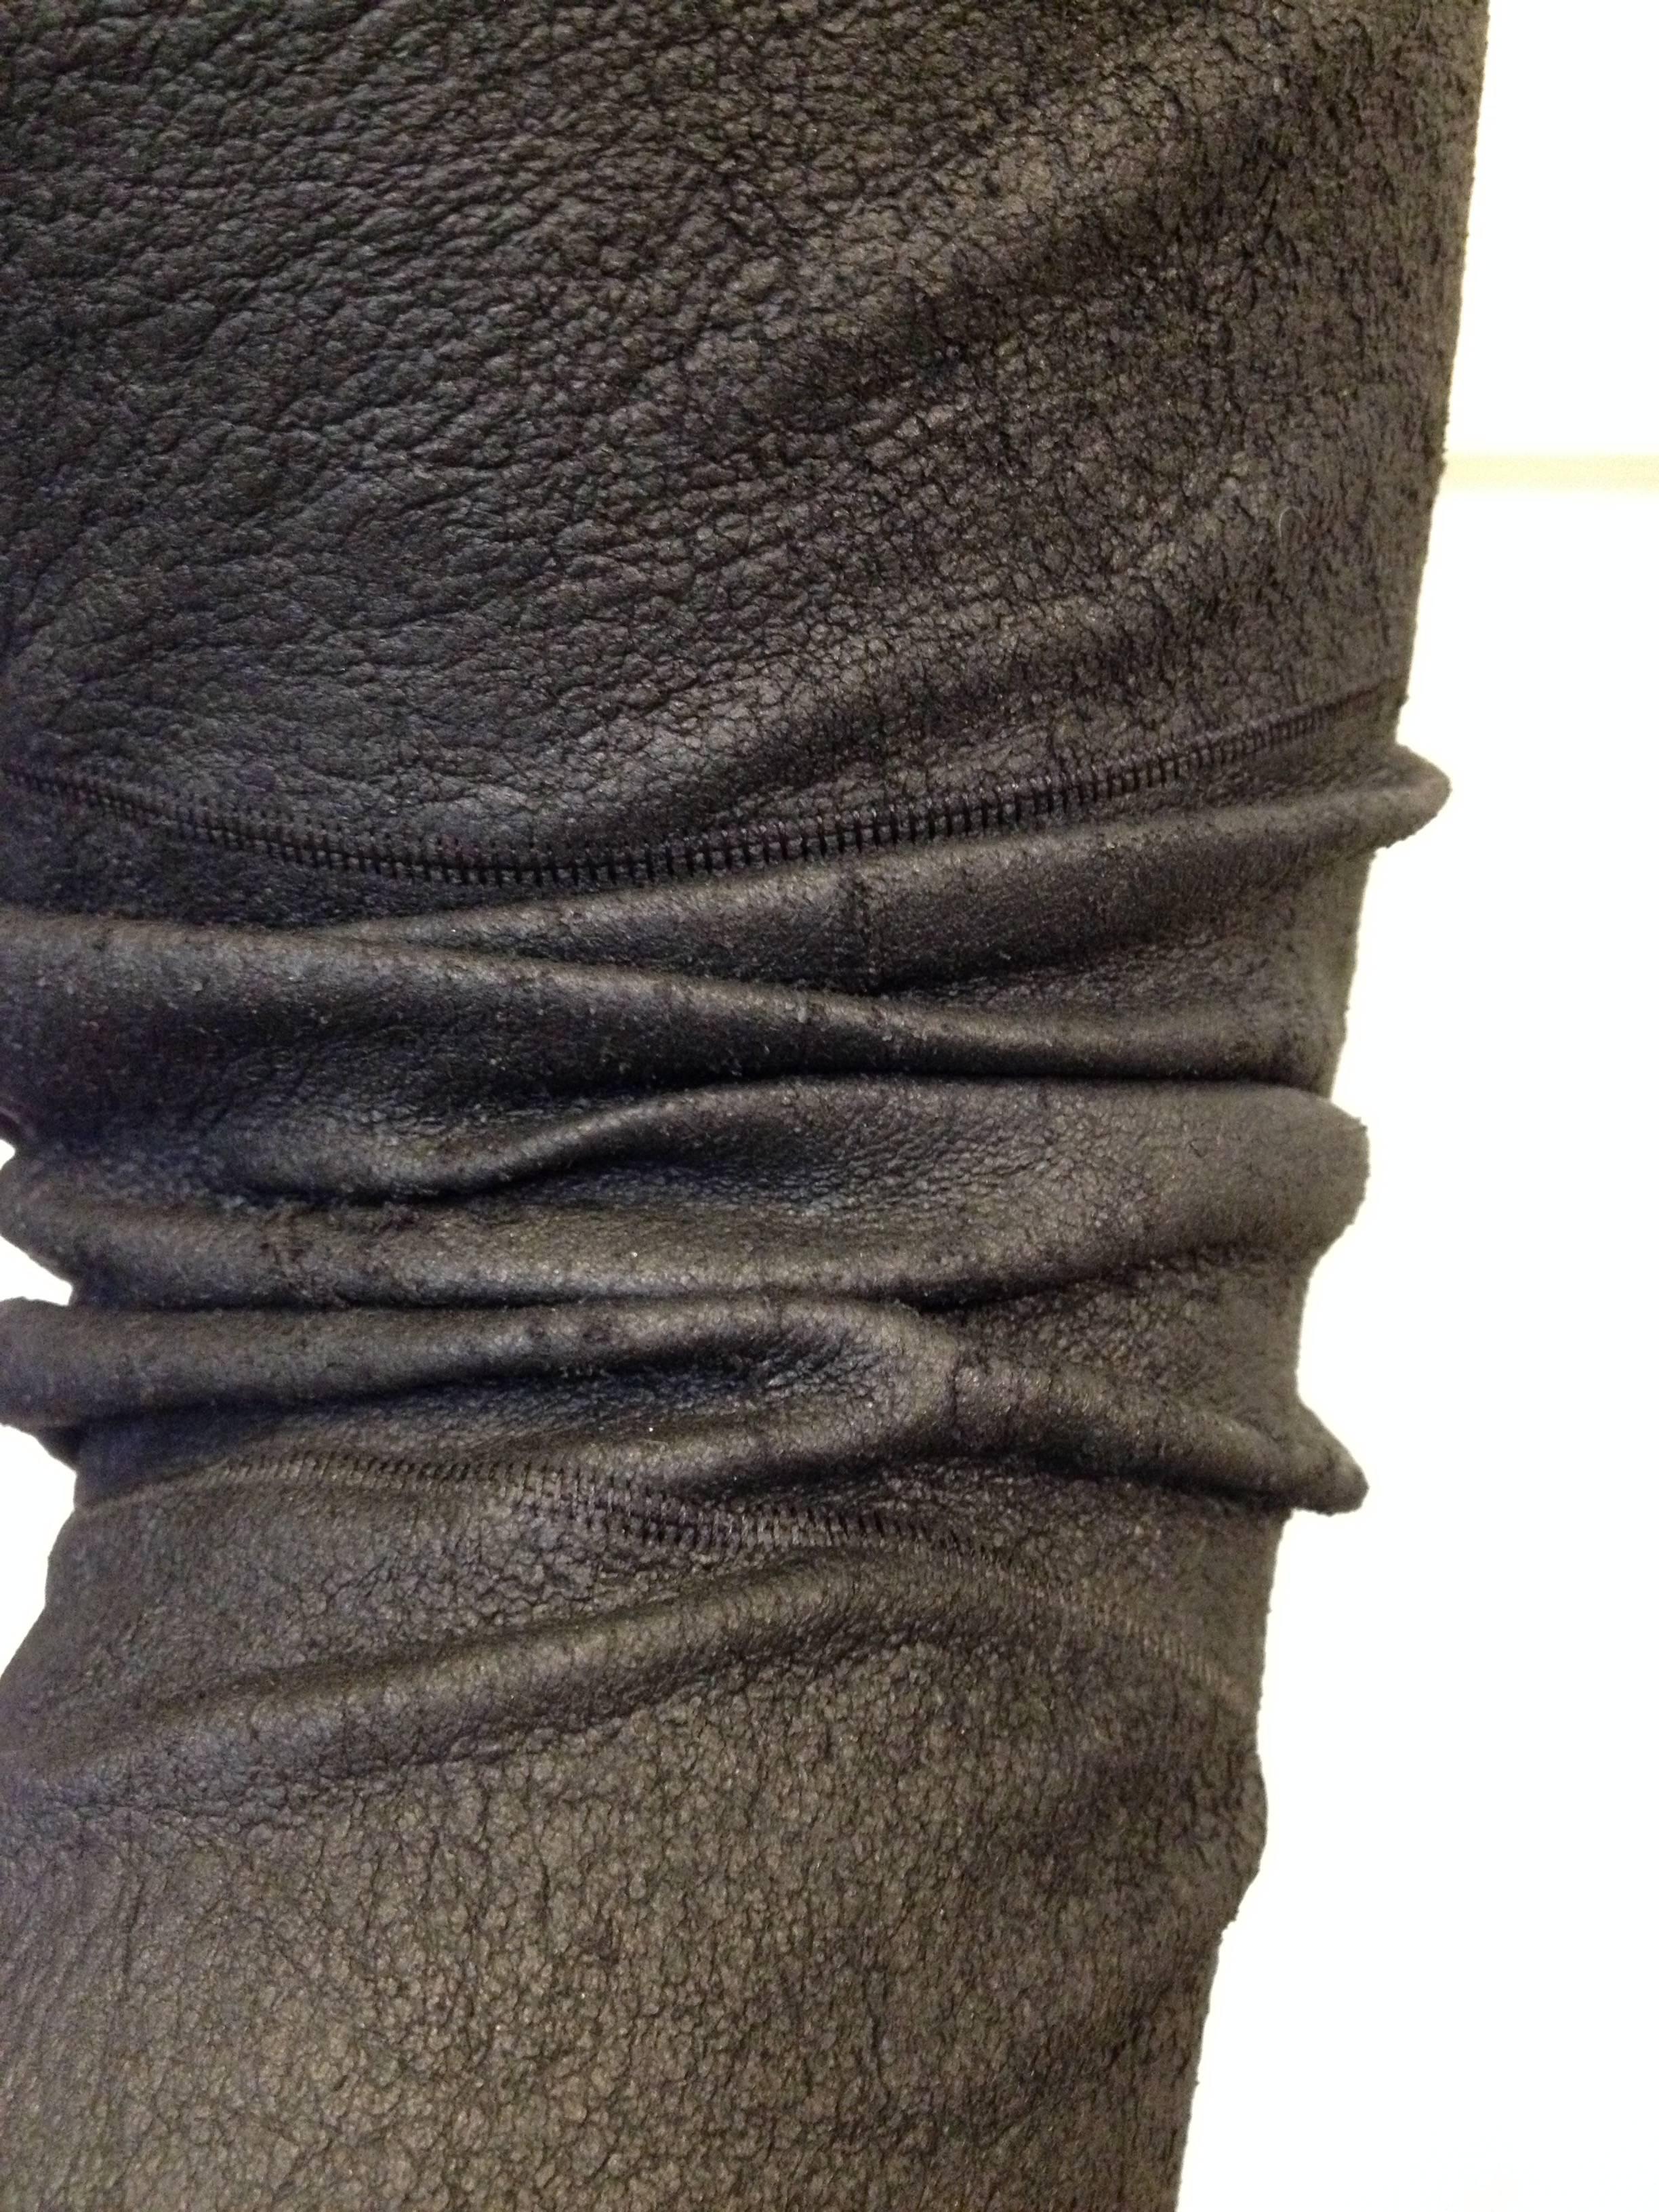 Women's Rick Owens Black Leather Leggings Size 6 For Sale